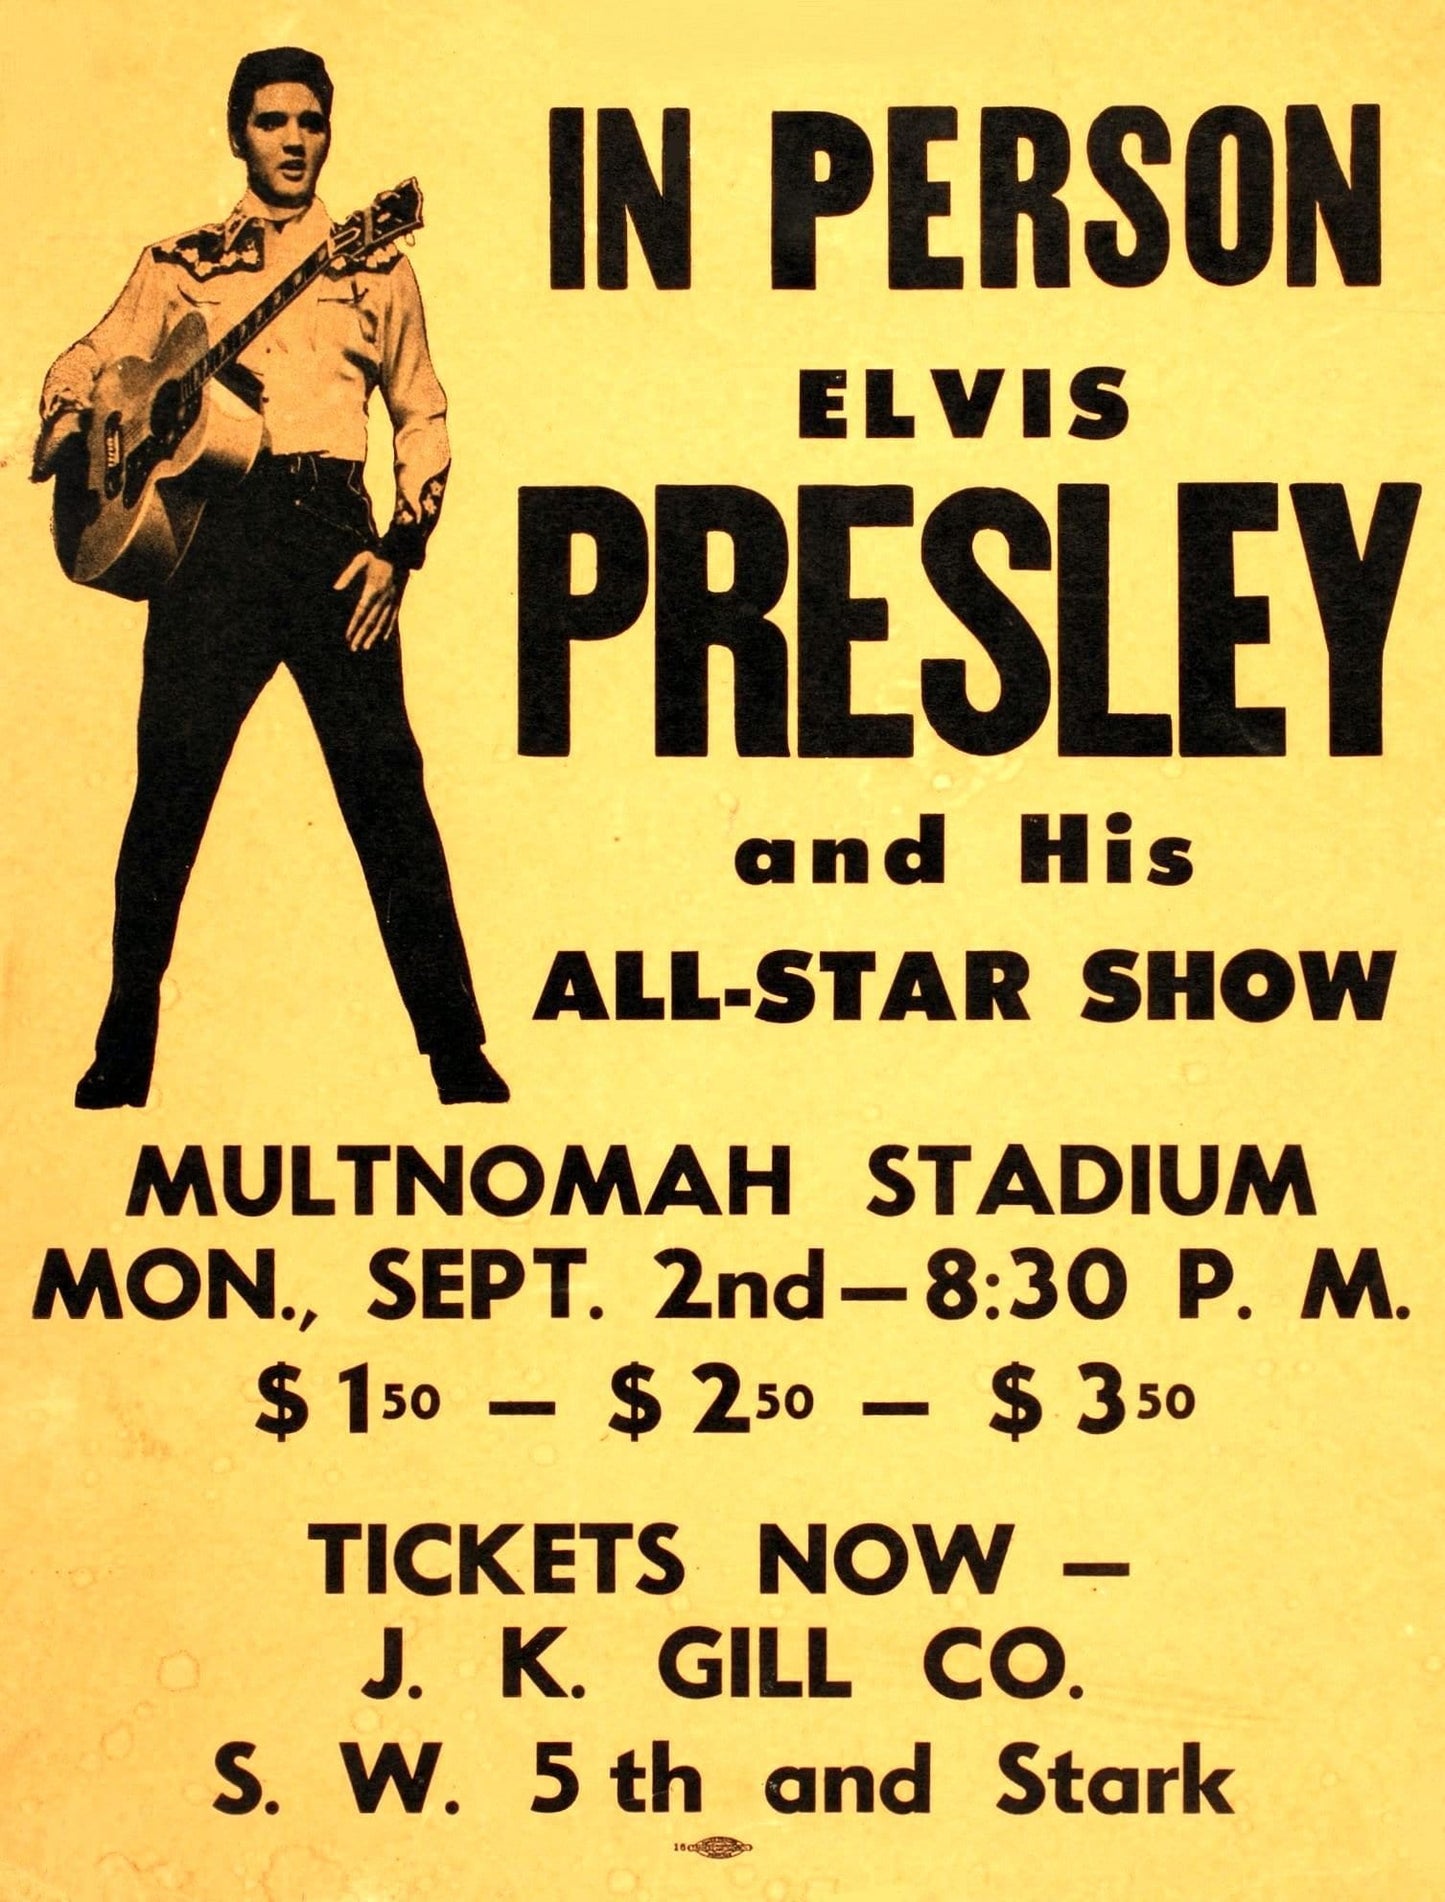 Elvis Presley Multnomah Stadium Concert poster (305)